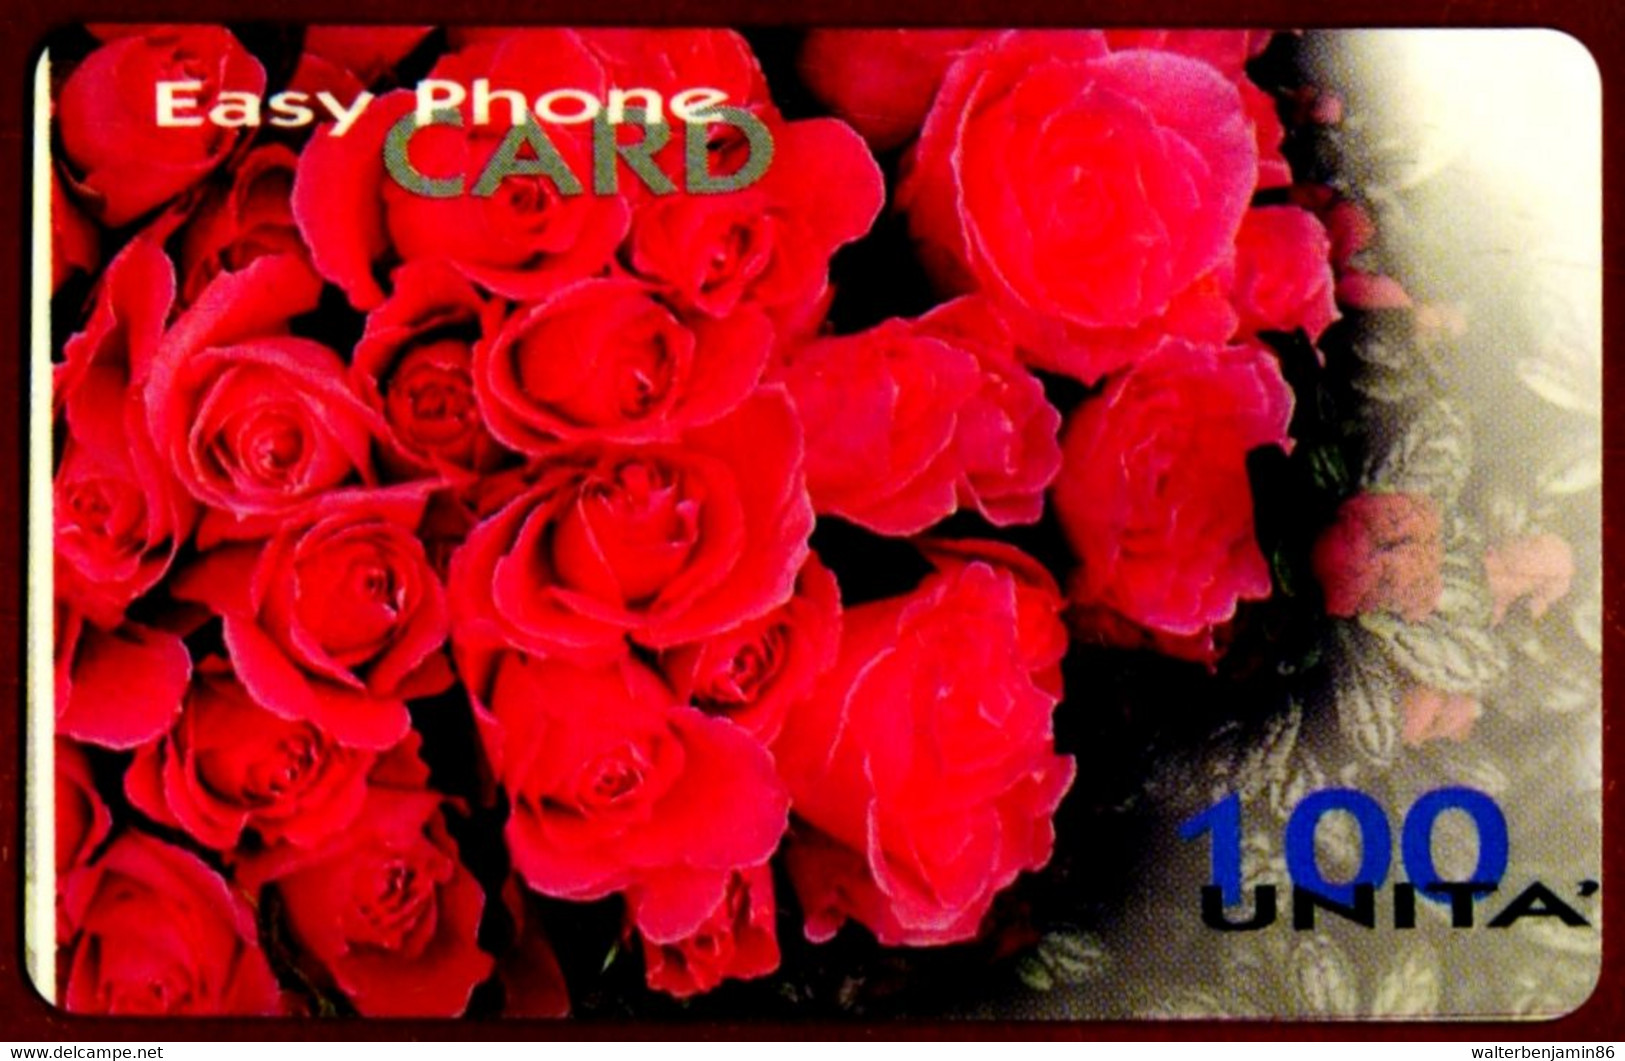 SCHEDA TELEFONICA PROTOTIPO EASY PHONE CARD (VALORE COLORE BLU) DIFETTO STAMPA - Tests & Diensten